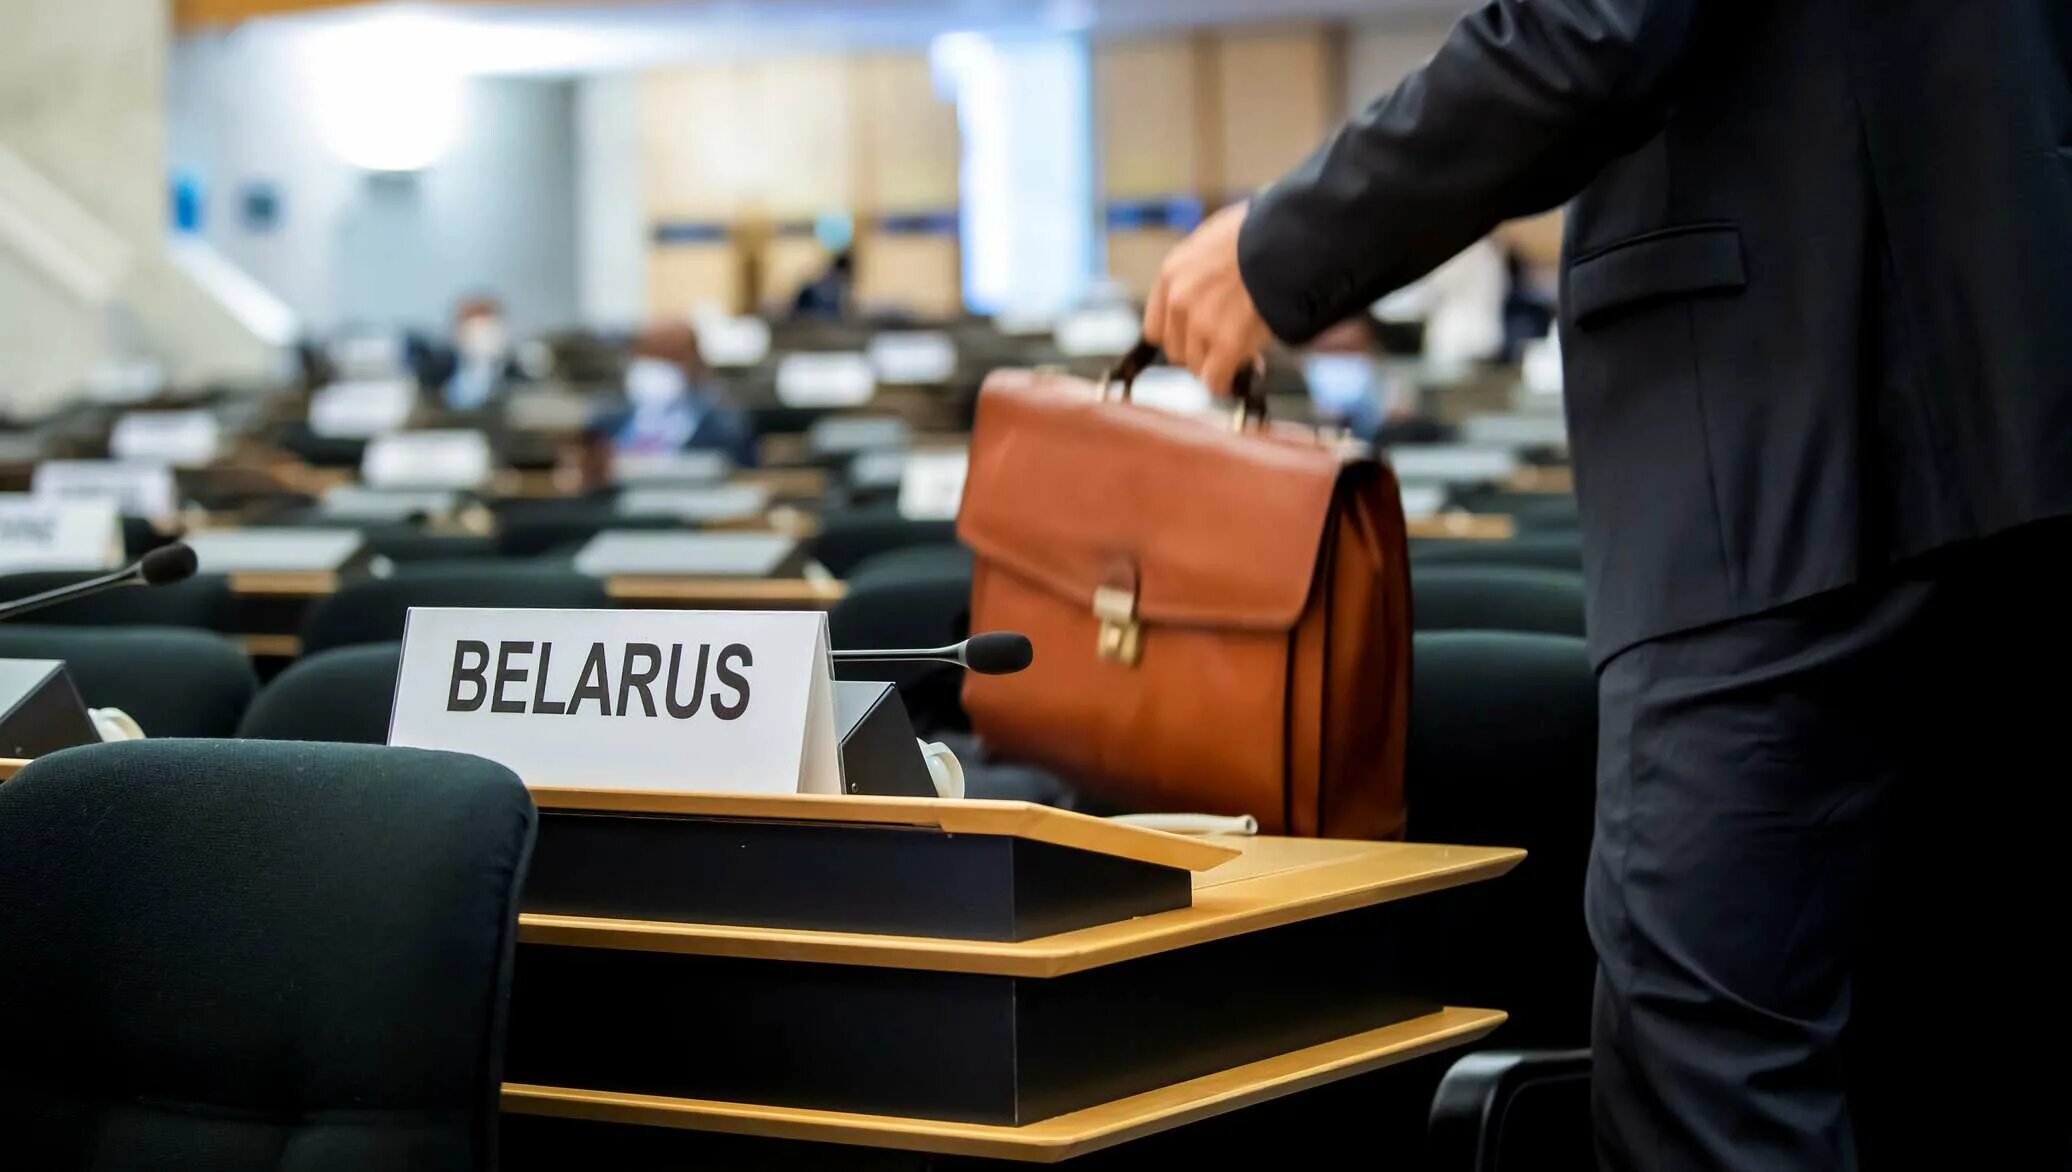 Оон беларусь. Представитель Белоруссии в ООН. ООН выгнал Беларусь. Позицию Беларуси в ООН.